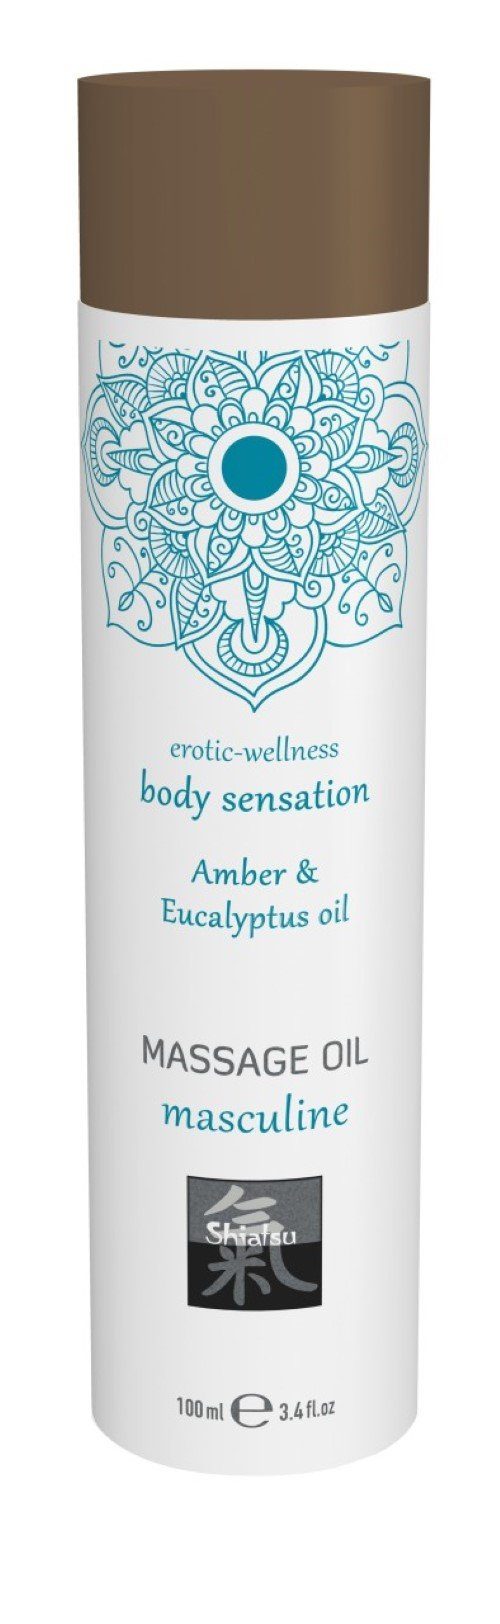 Shiatsu Gleit- & Massageöl 100 ml - SHIATSU Massage oil masculine Amber & Eucalyptus oil 100ml